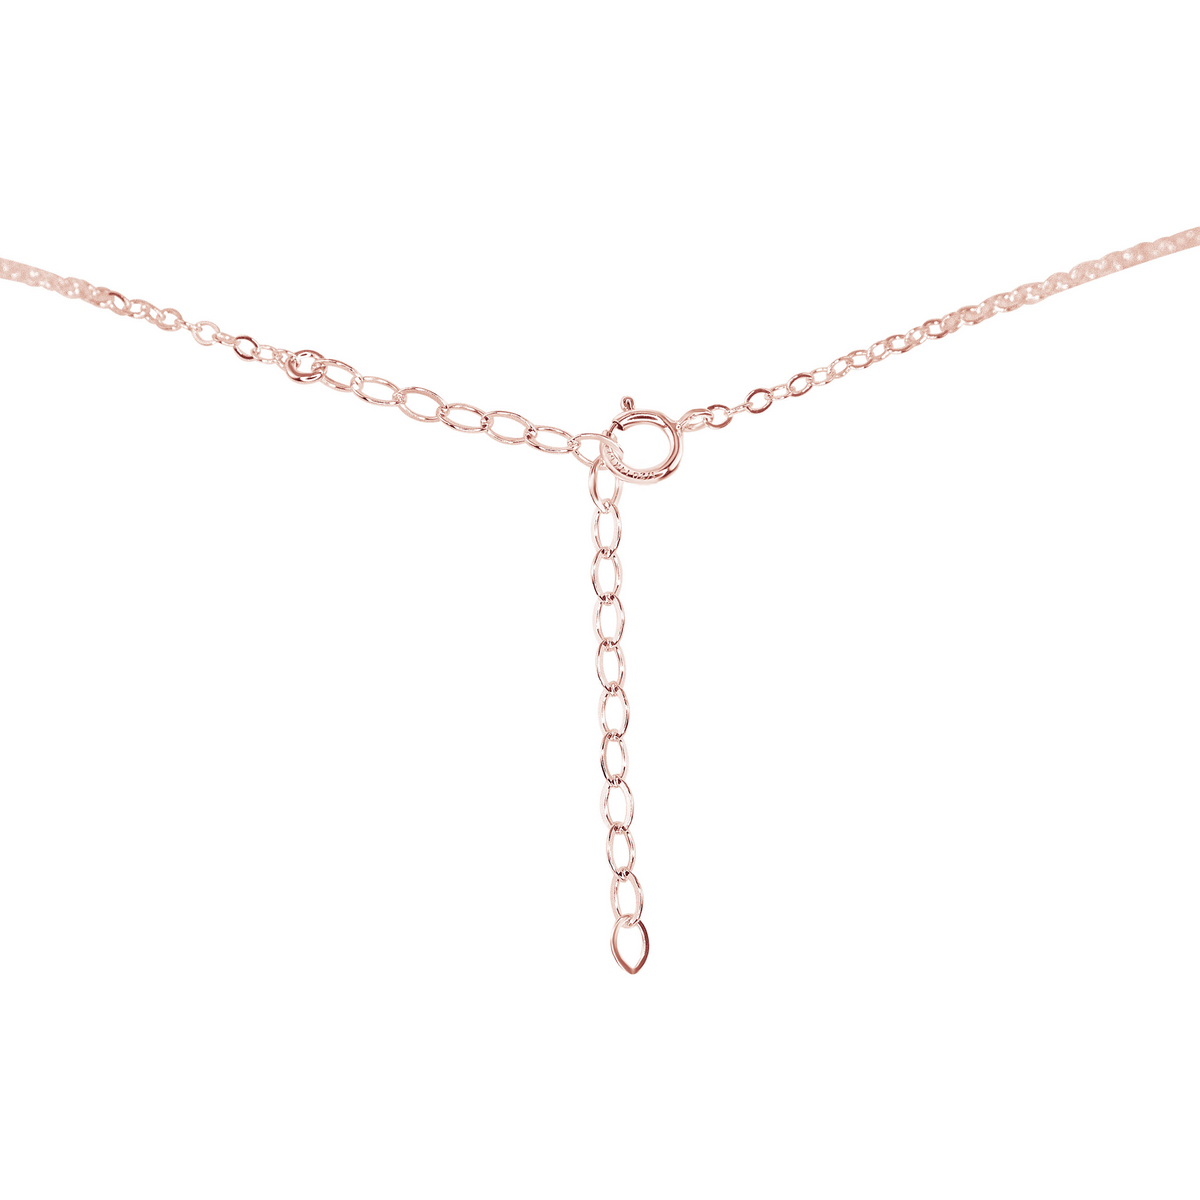 Tiny Raw Rose Quartz Pendant Necklace